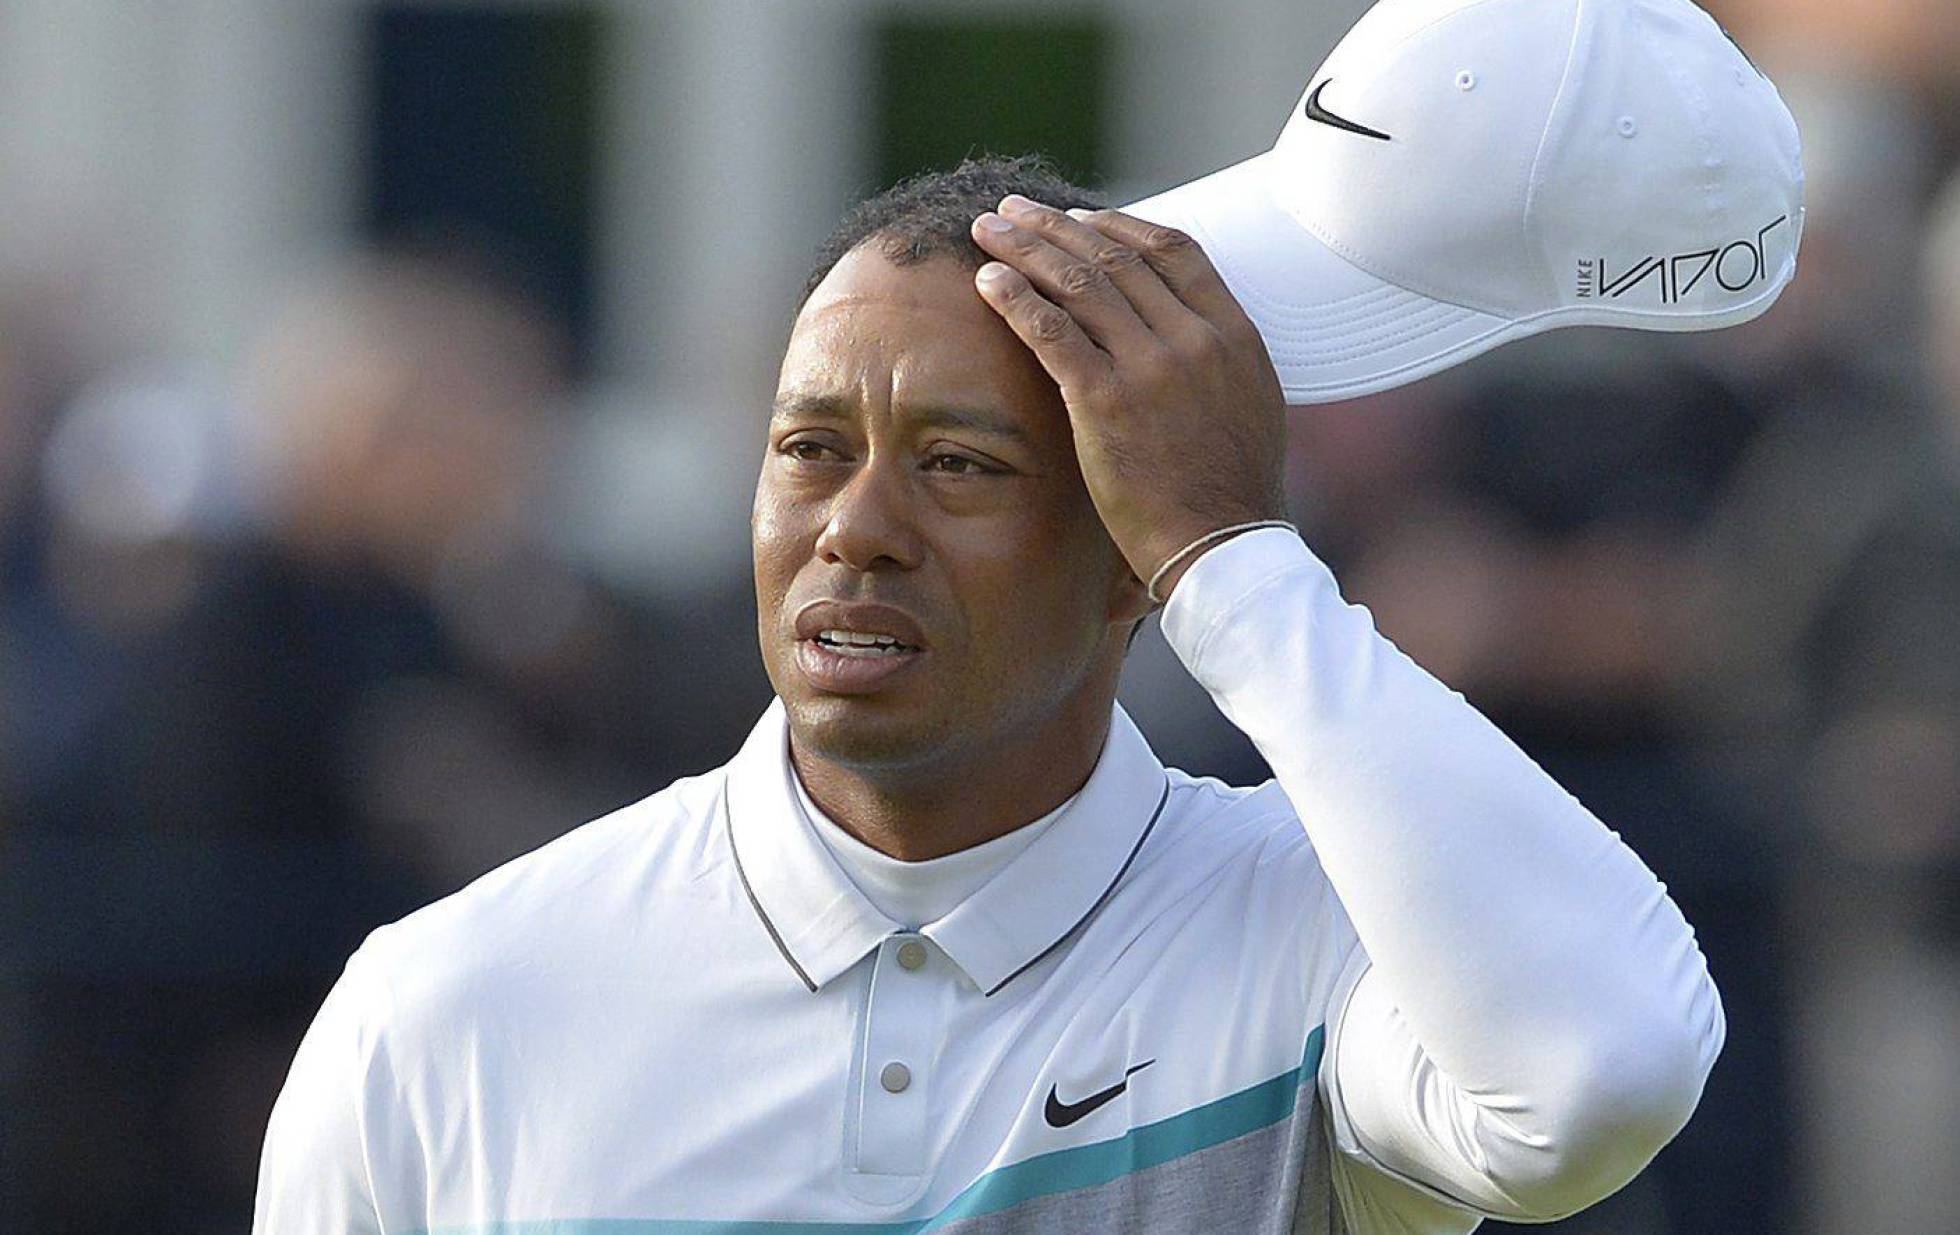 Tiger Woods pudo quedarse dormido al volante, según expertos forenses